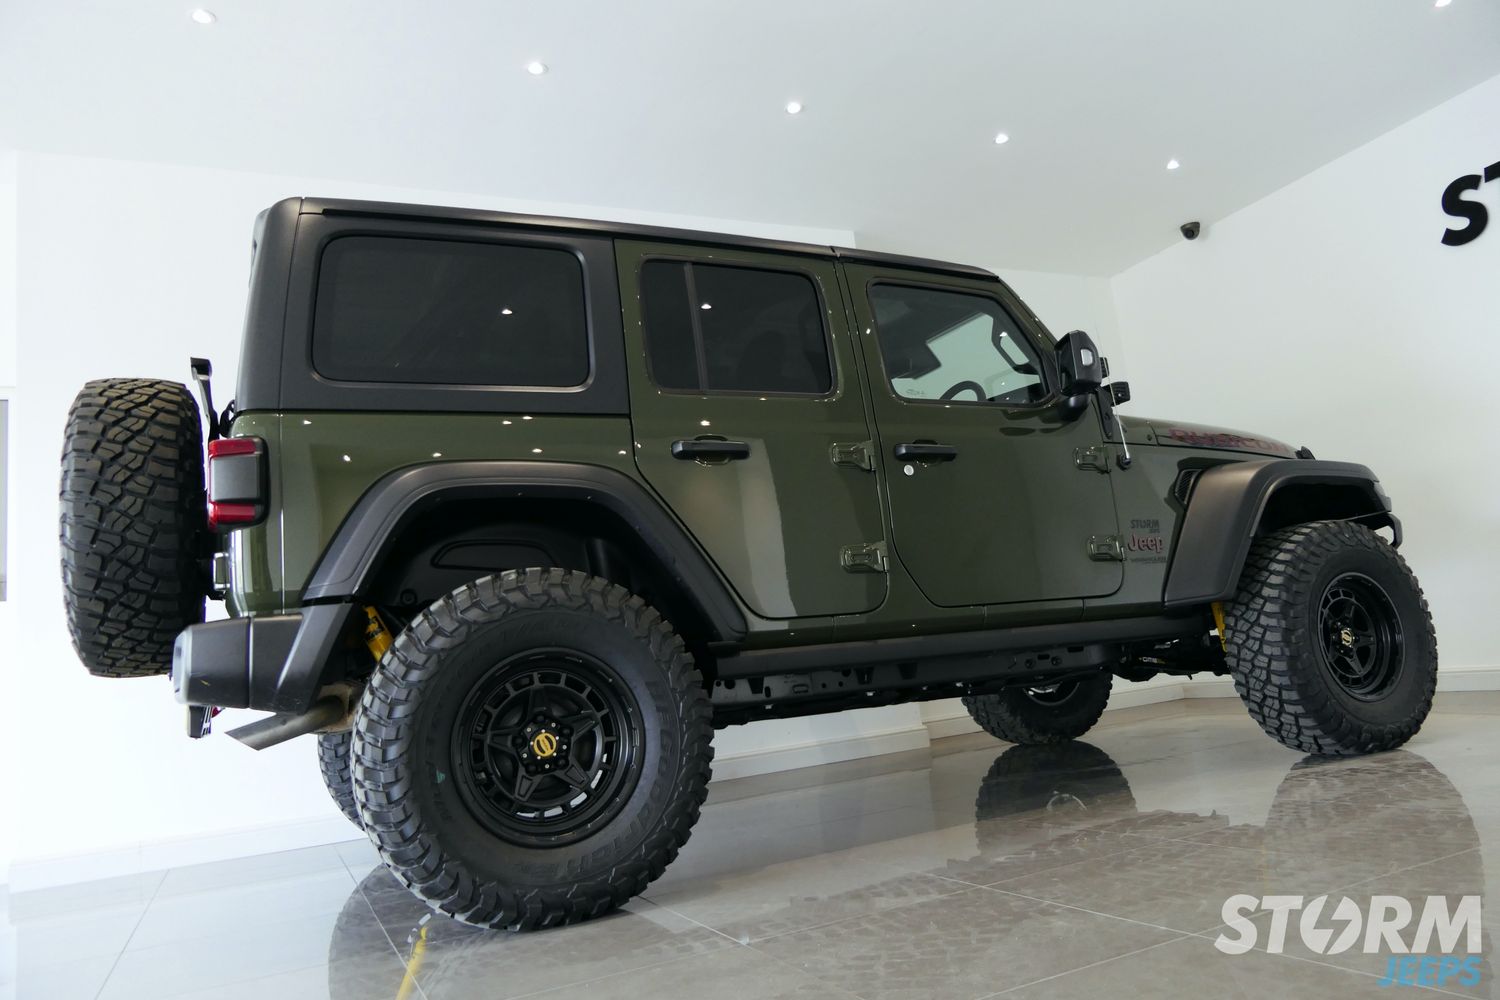 STORM-47, 2021 Sarge Green Jeep Wrangler JL Rubicon 4 Door  | Showcase  | Storm Jeeps